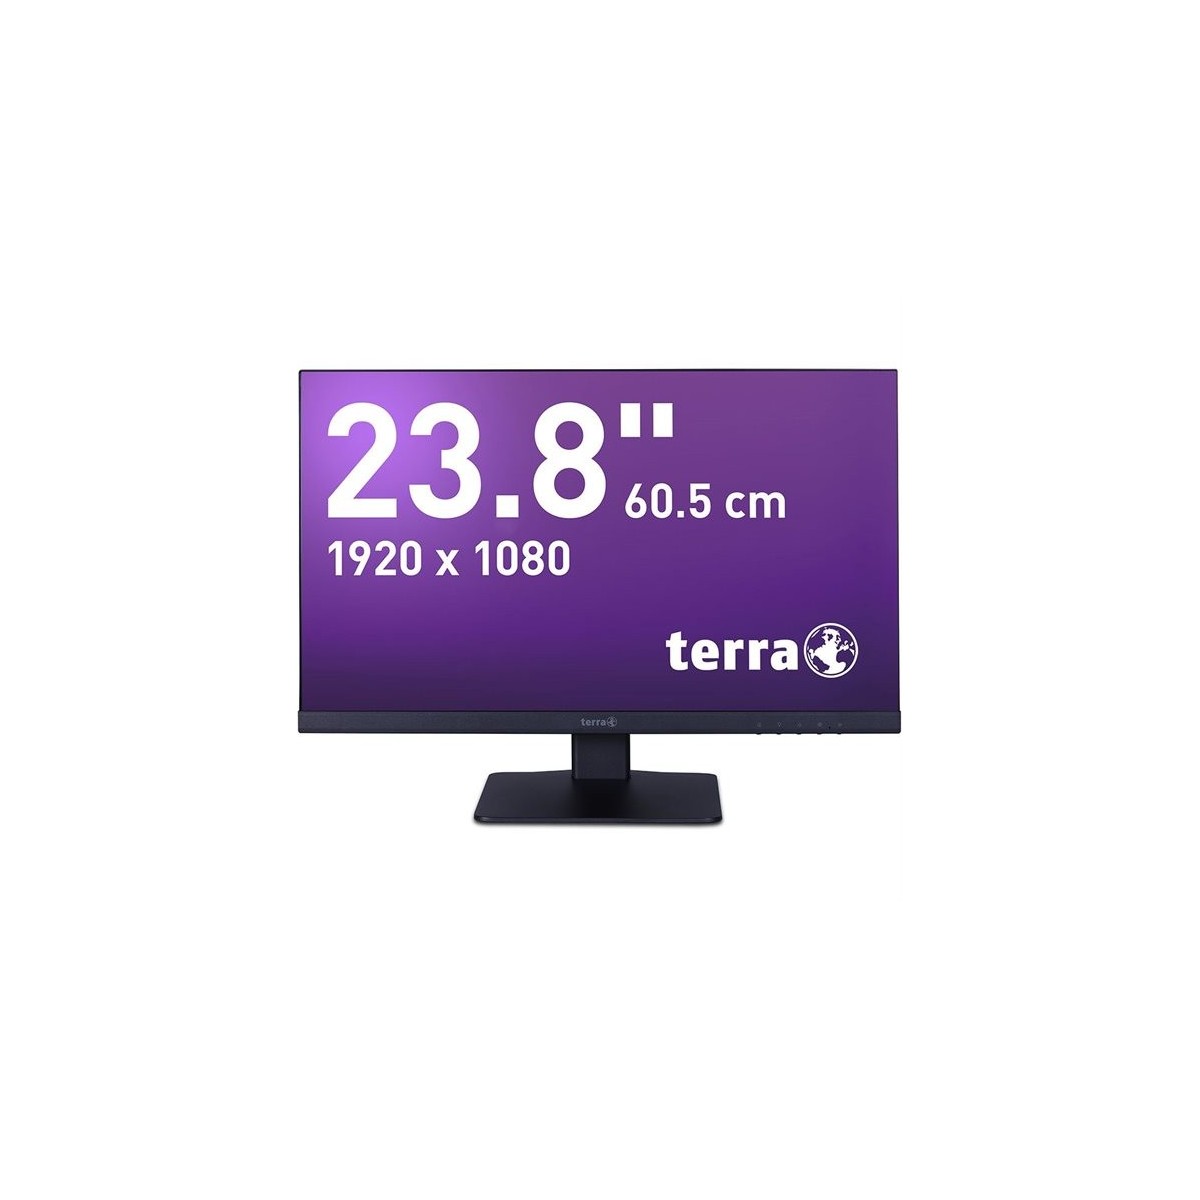 TERRA LED 2448W V2 schwarz DP-HDMI GREENLINE PLUS - Flat Screen - 60.5 cm